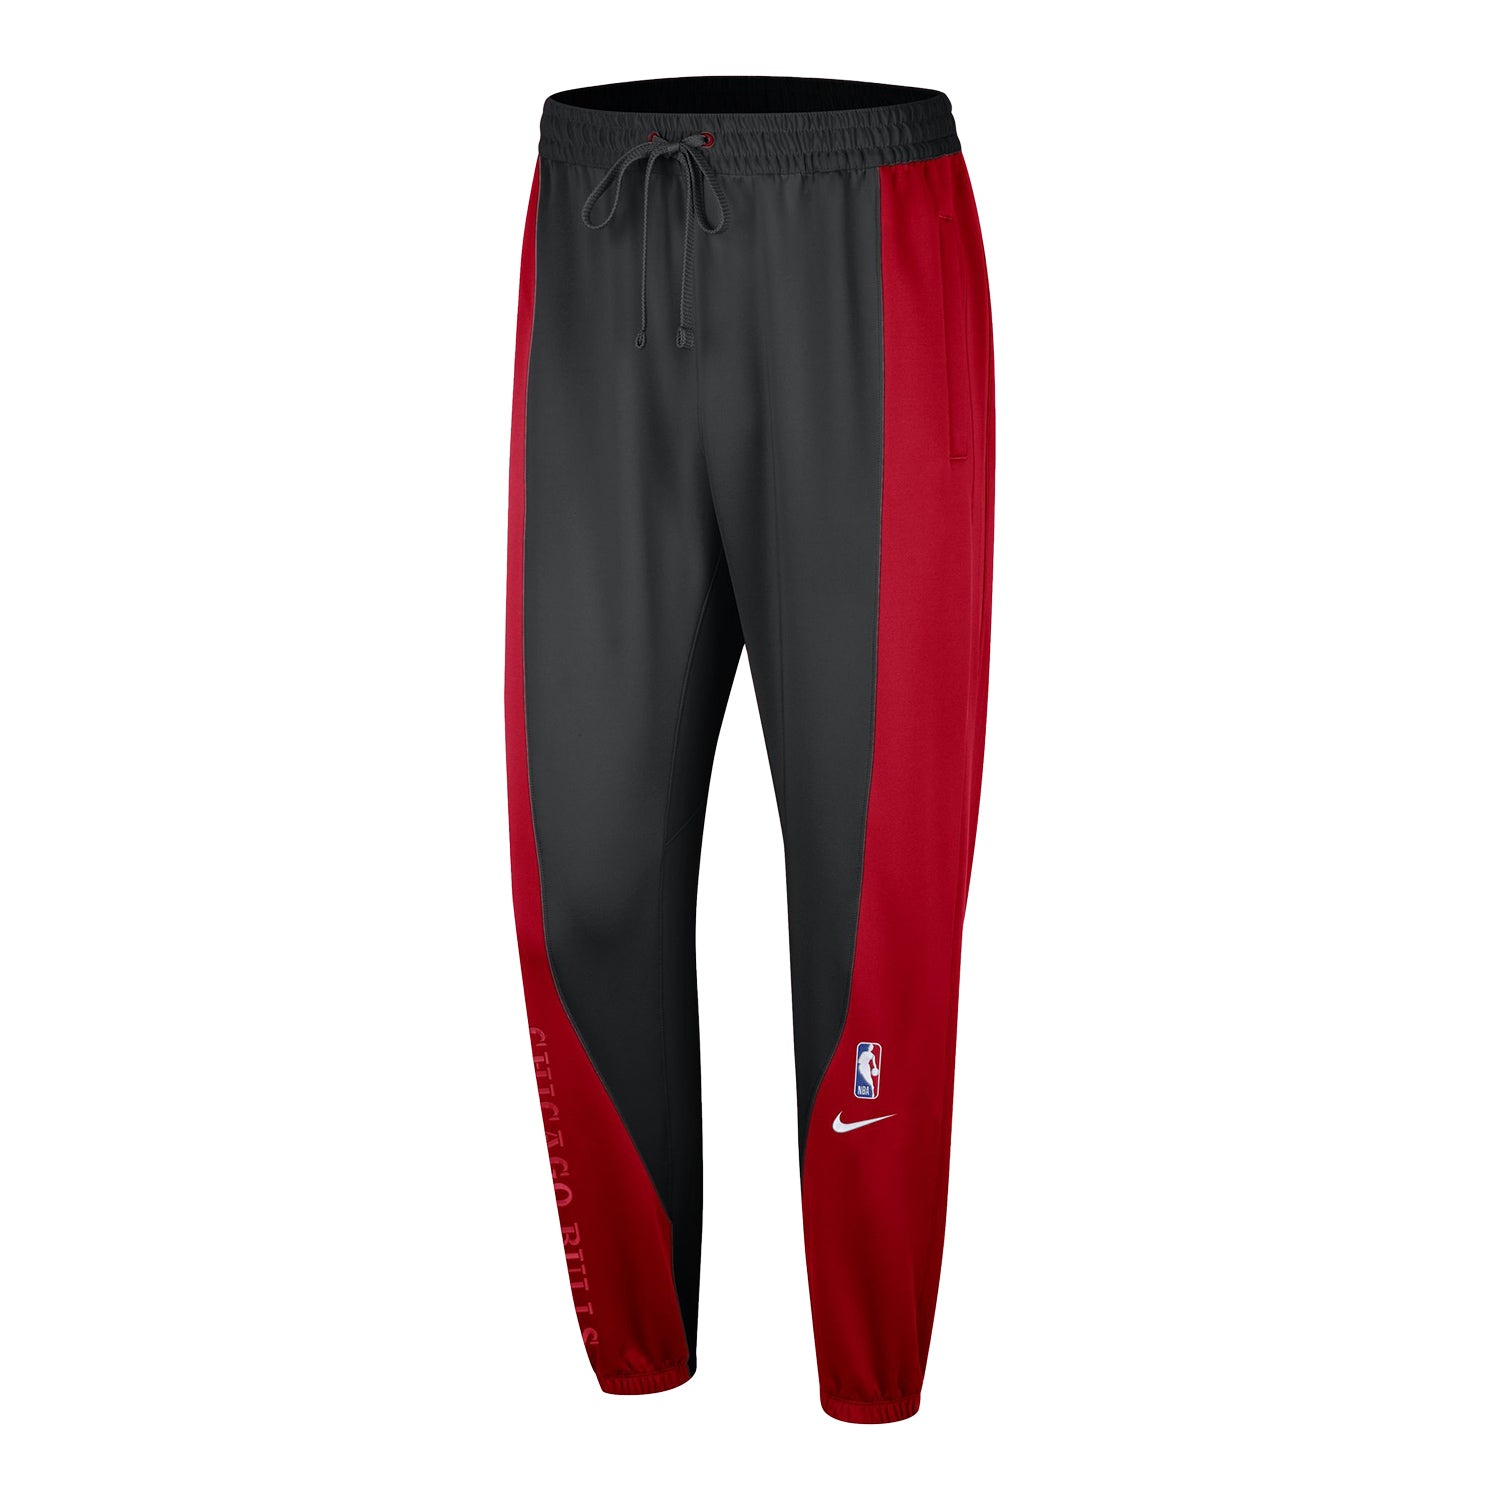 Chicago Bulls Nike Pants for sale online